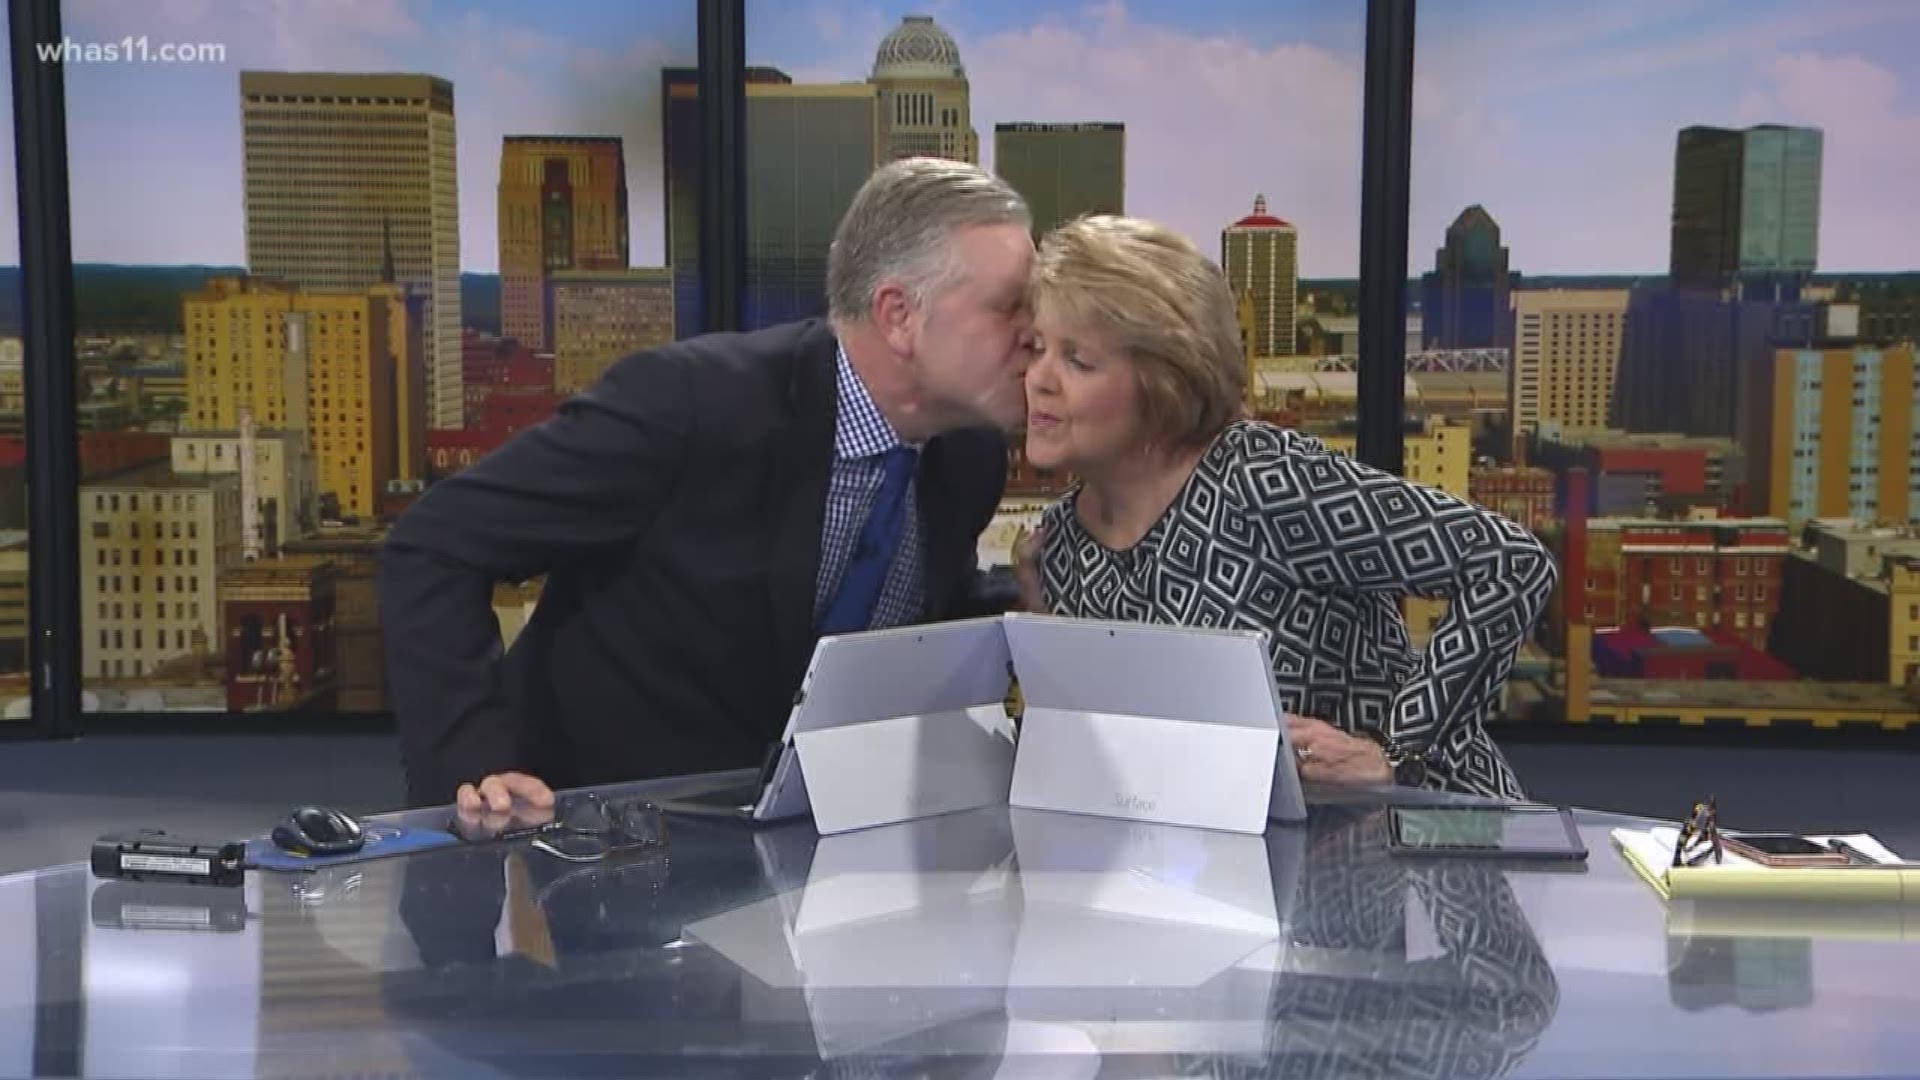 WHAS11 anchors Doug Proffitt and Rachel Platt share a loving moment after Rachel announced her decision to leave local news.